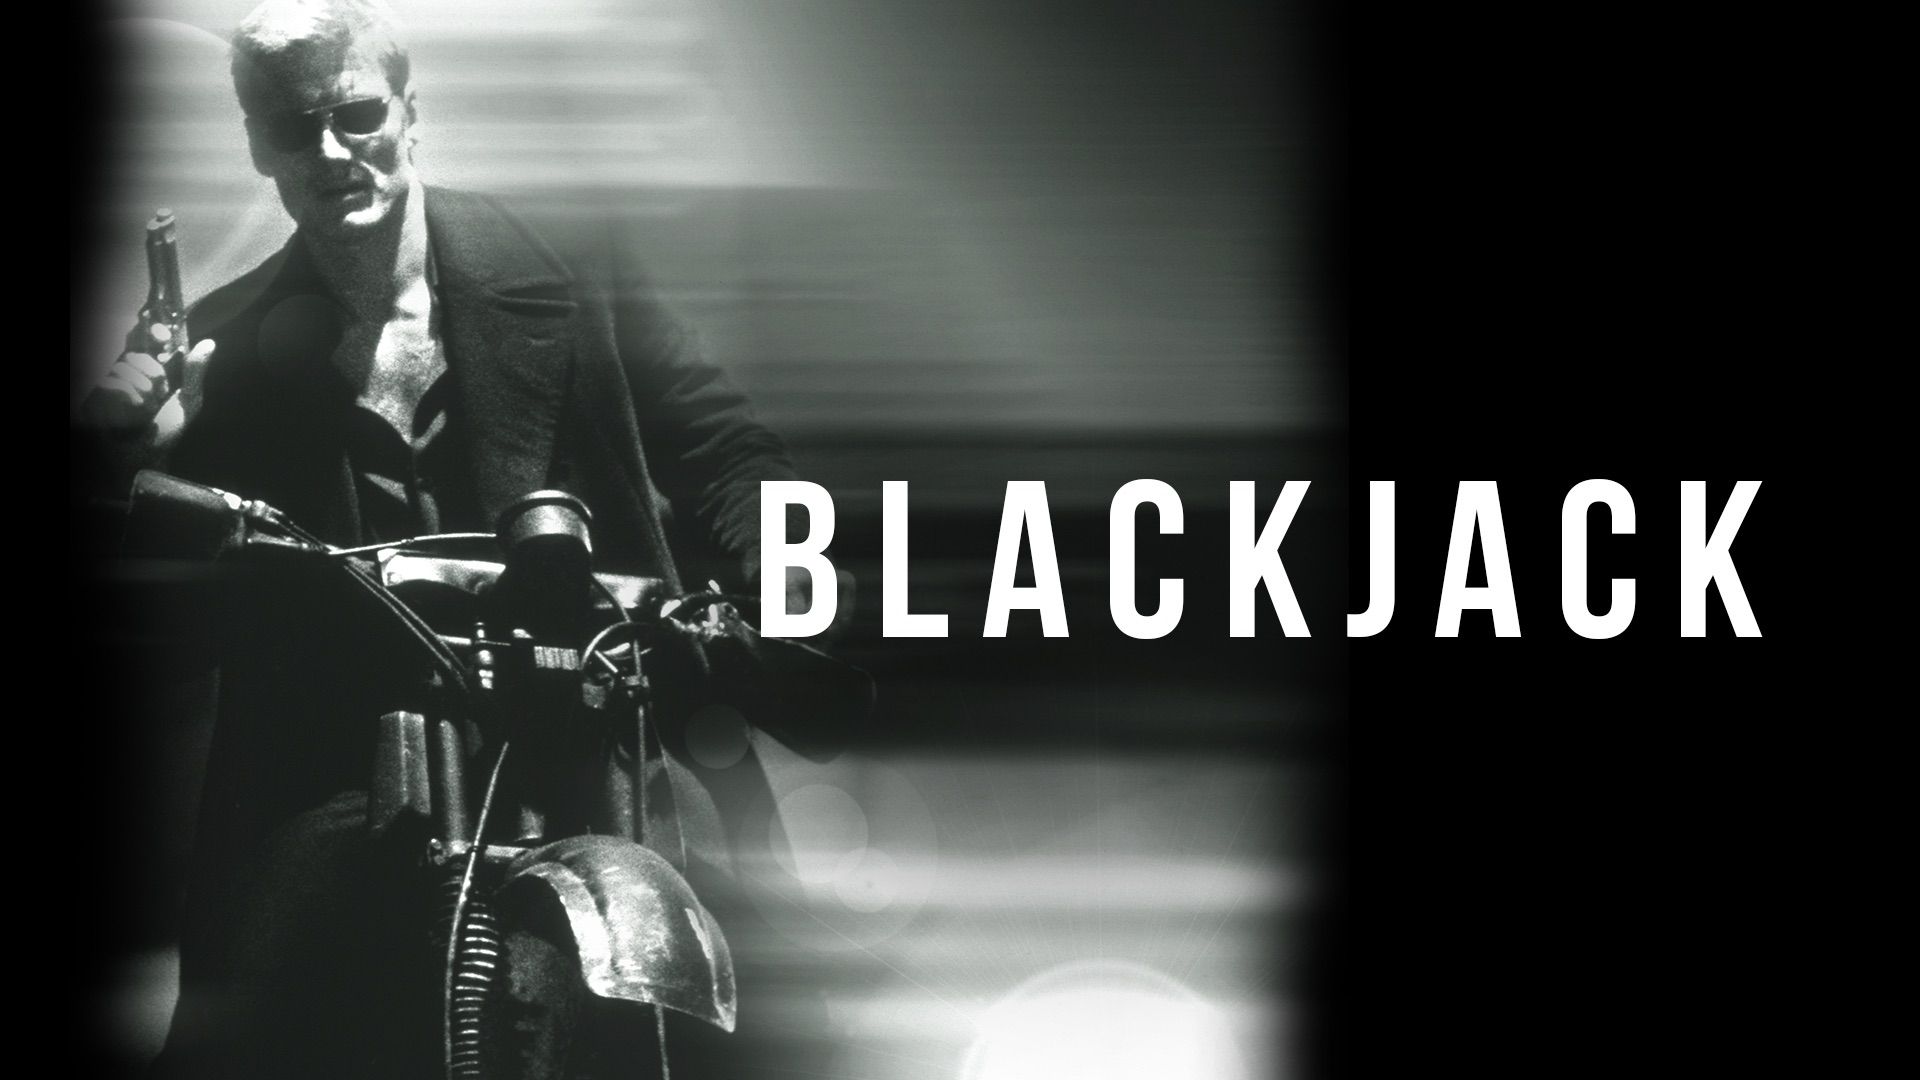 Blackjack Backdrop